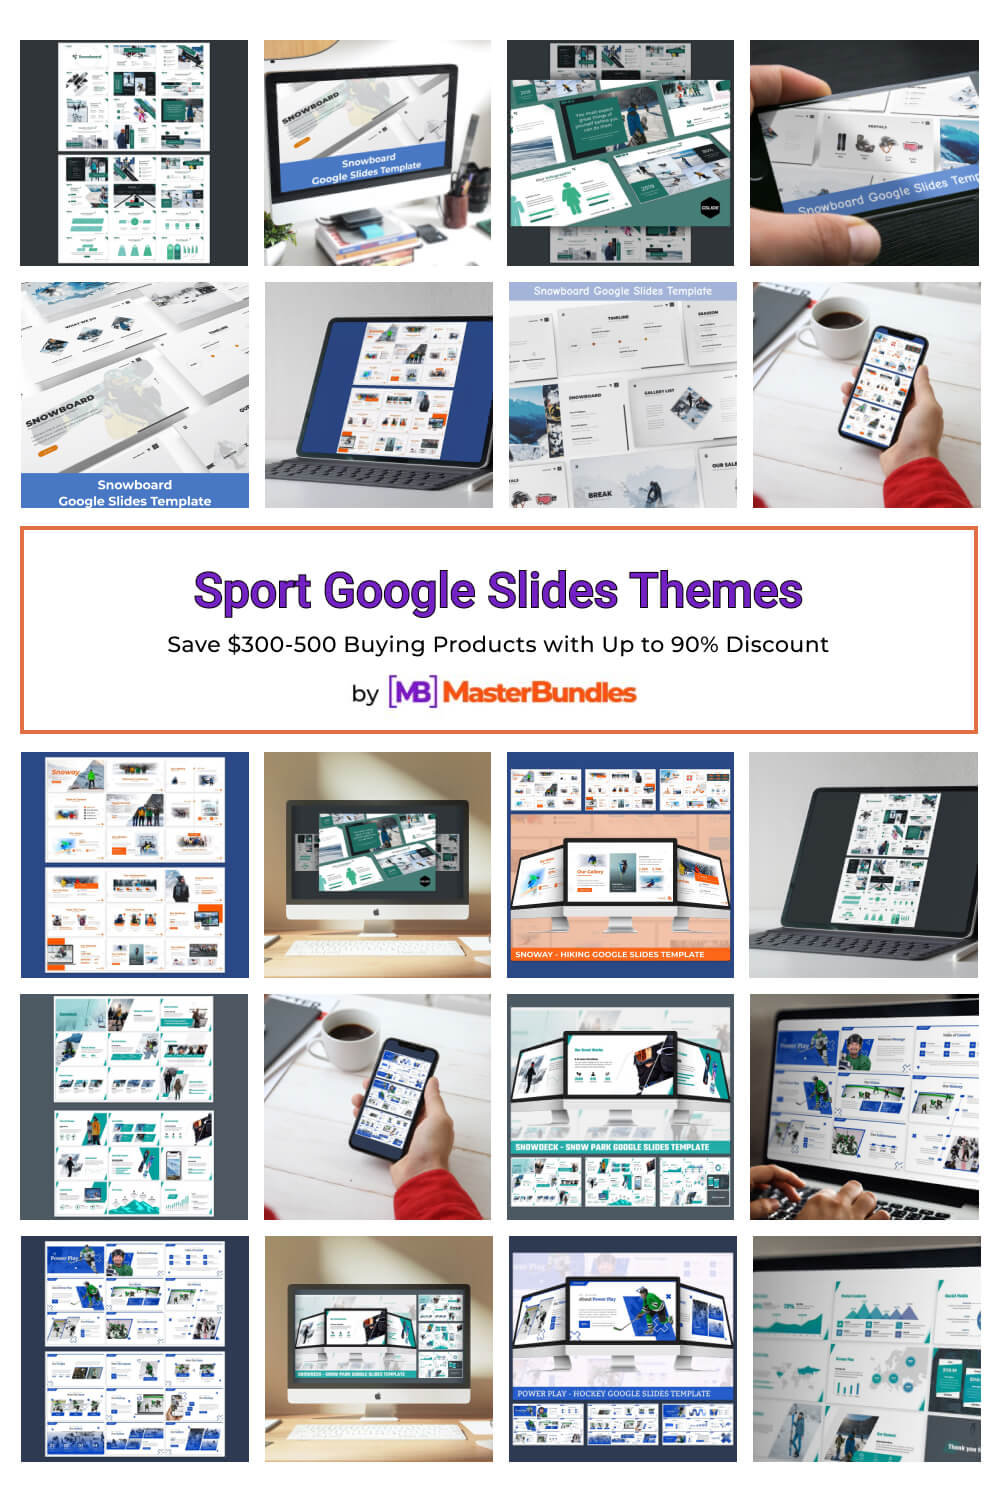 sport google slides themes pinterest image.